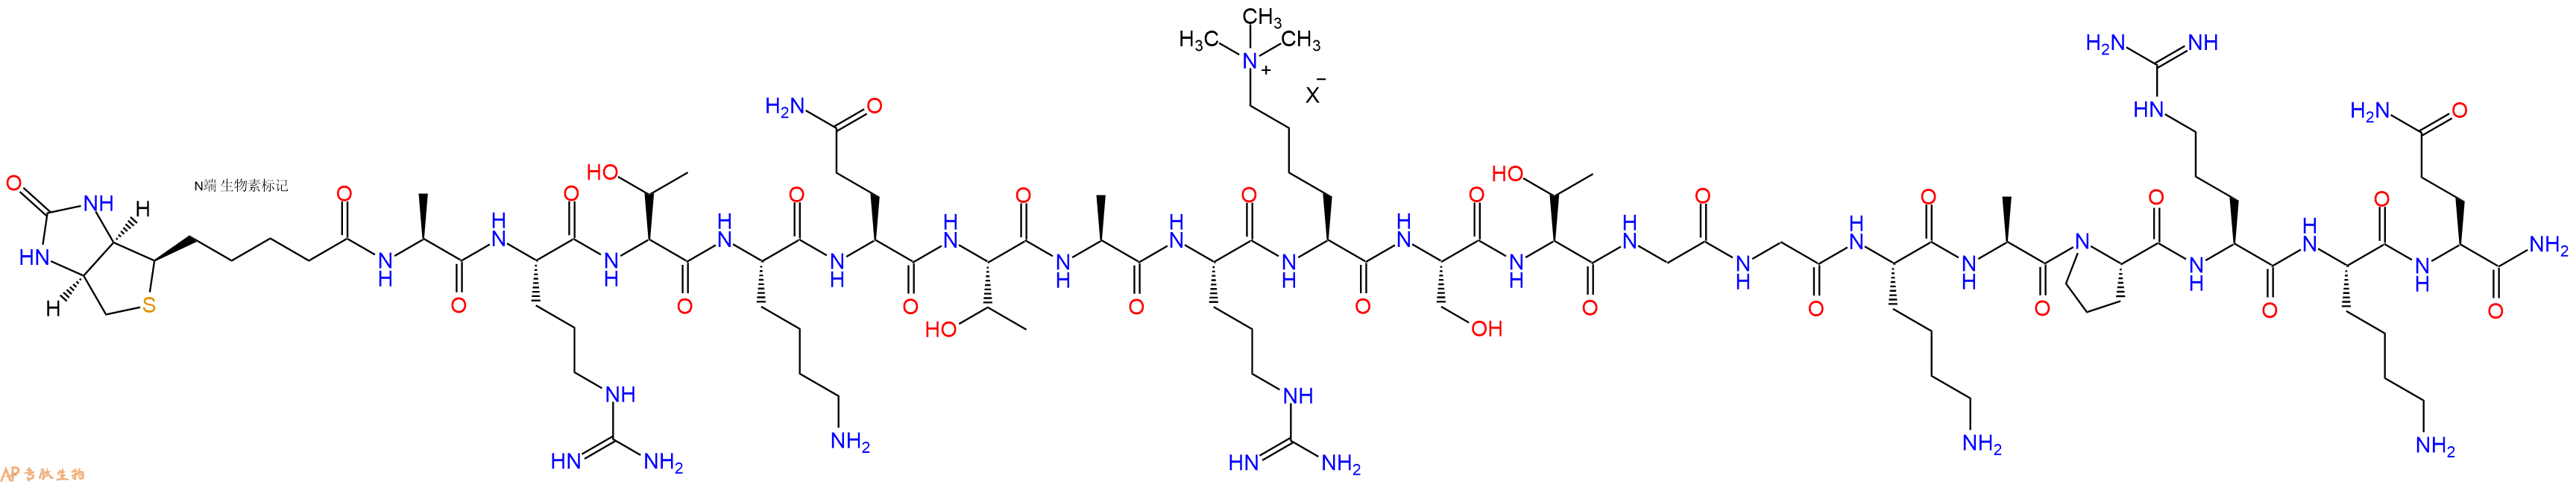 专肽生物产品Histone H3 (1-19) tri-methylated Lys9,Biotin label